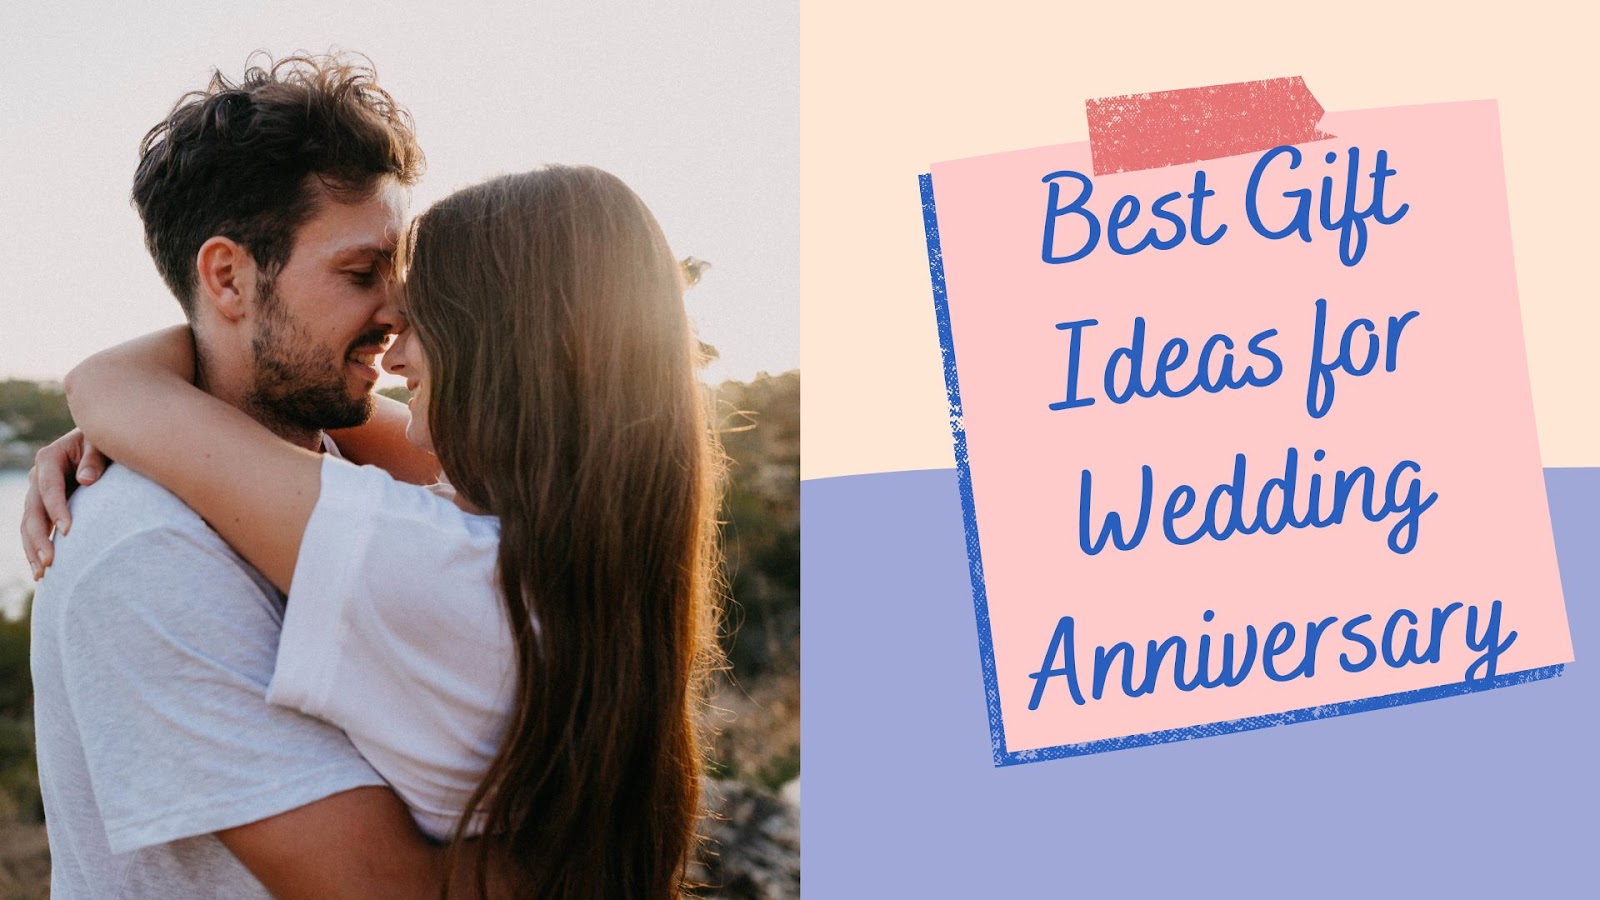 Best Gift Ideas for Wedding anniversary